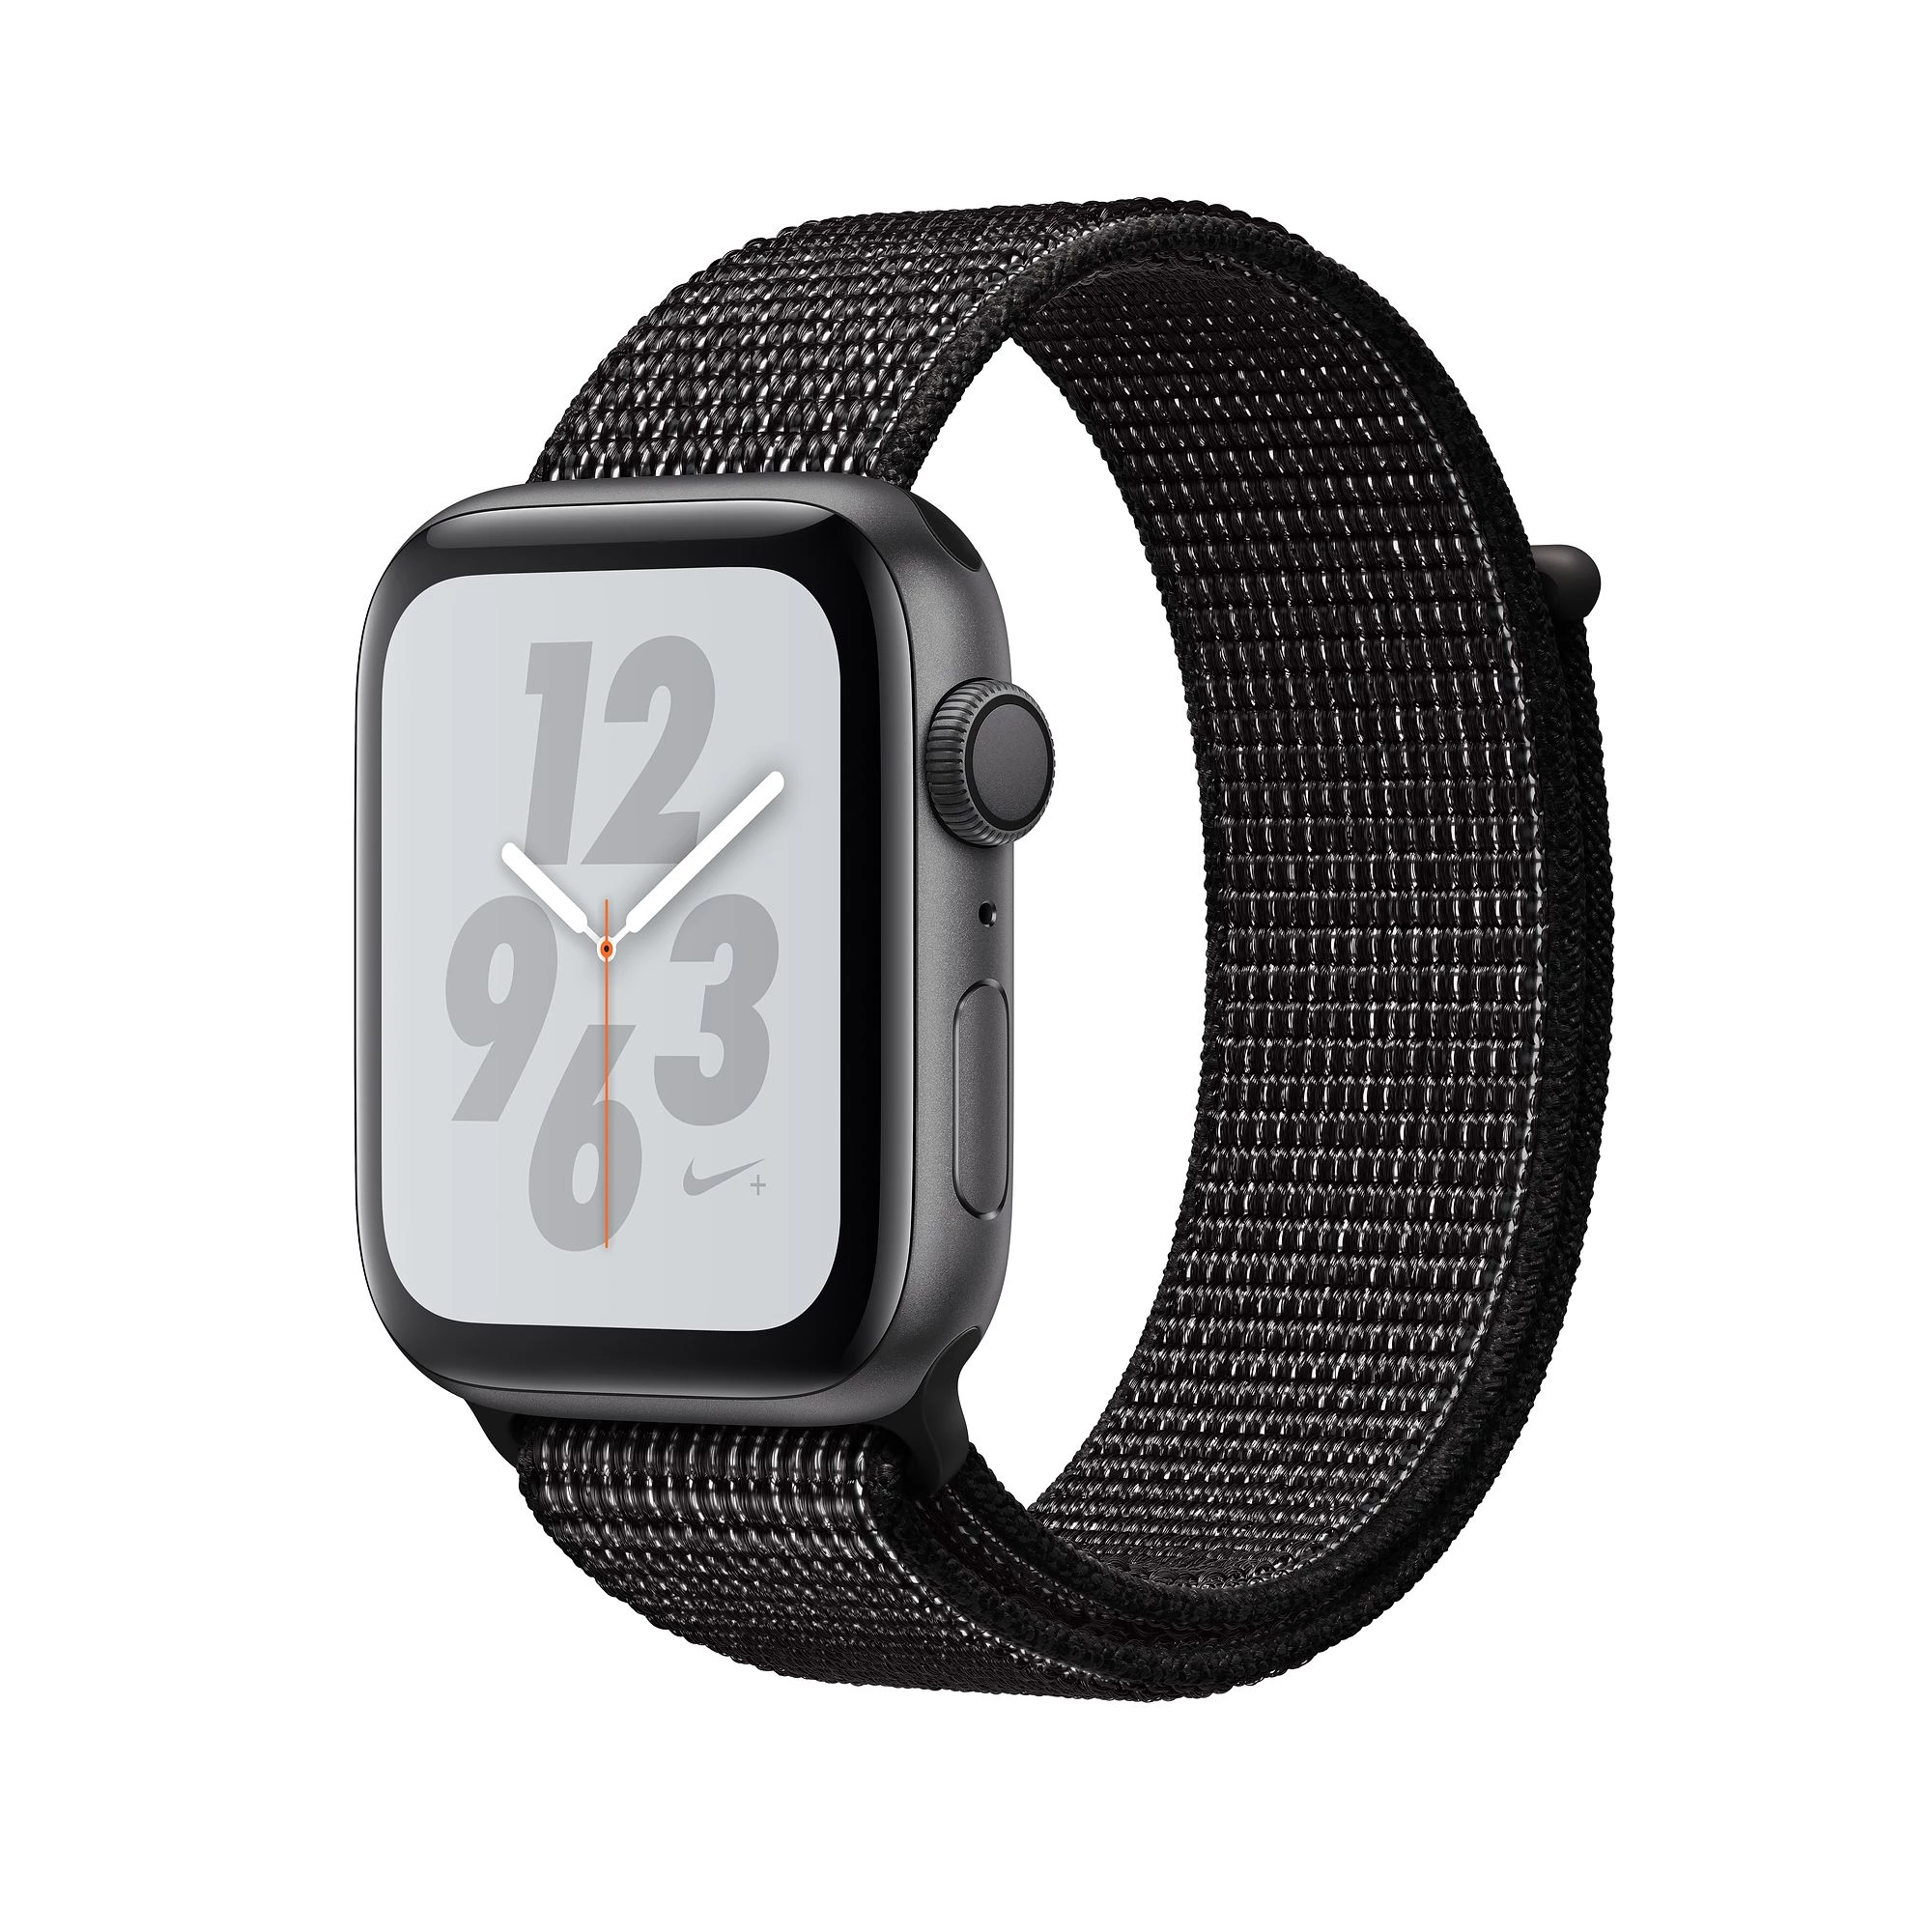 Apple Watch Series 4 Nike + (GPS) 40mm Space Gray Aluminium Case with Black Nike Sport Loop (MU7G2)